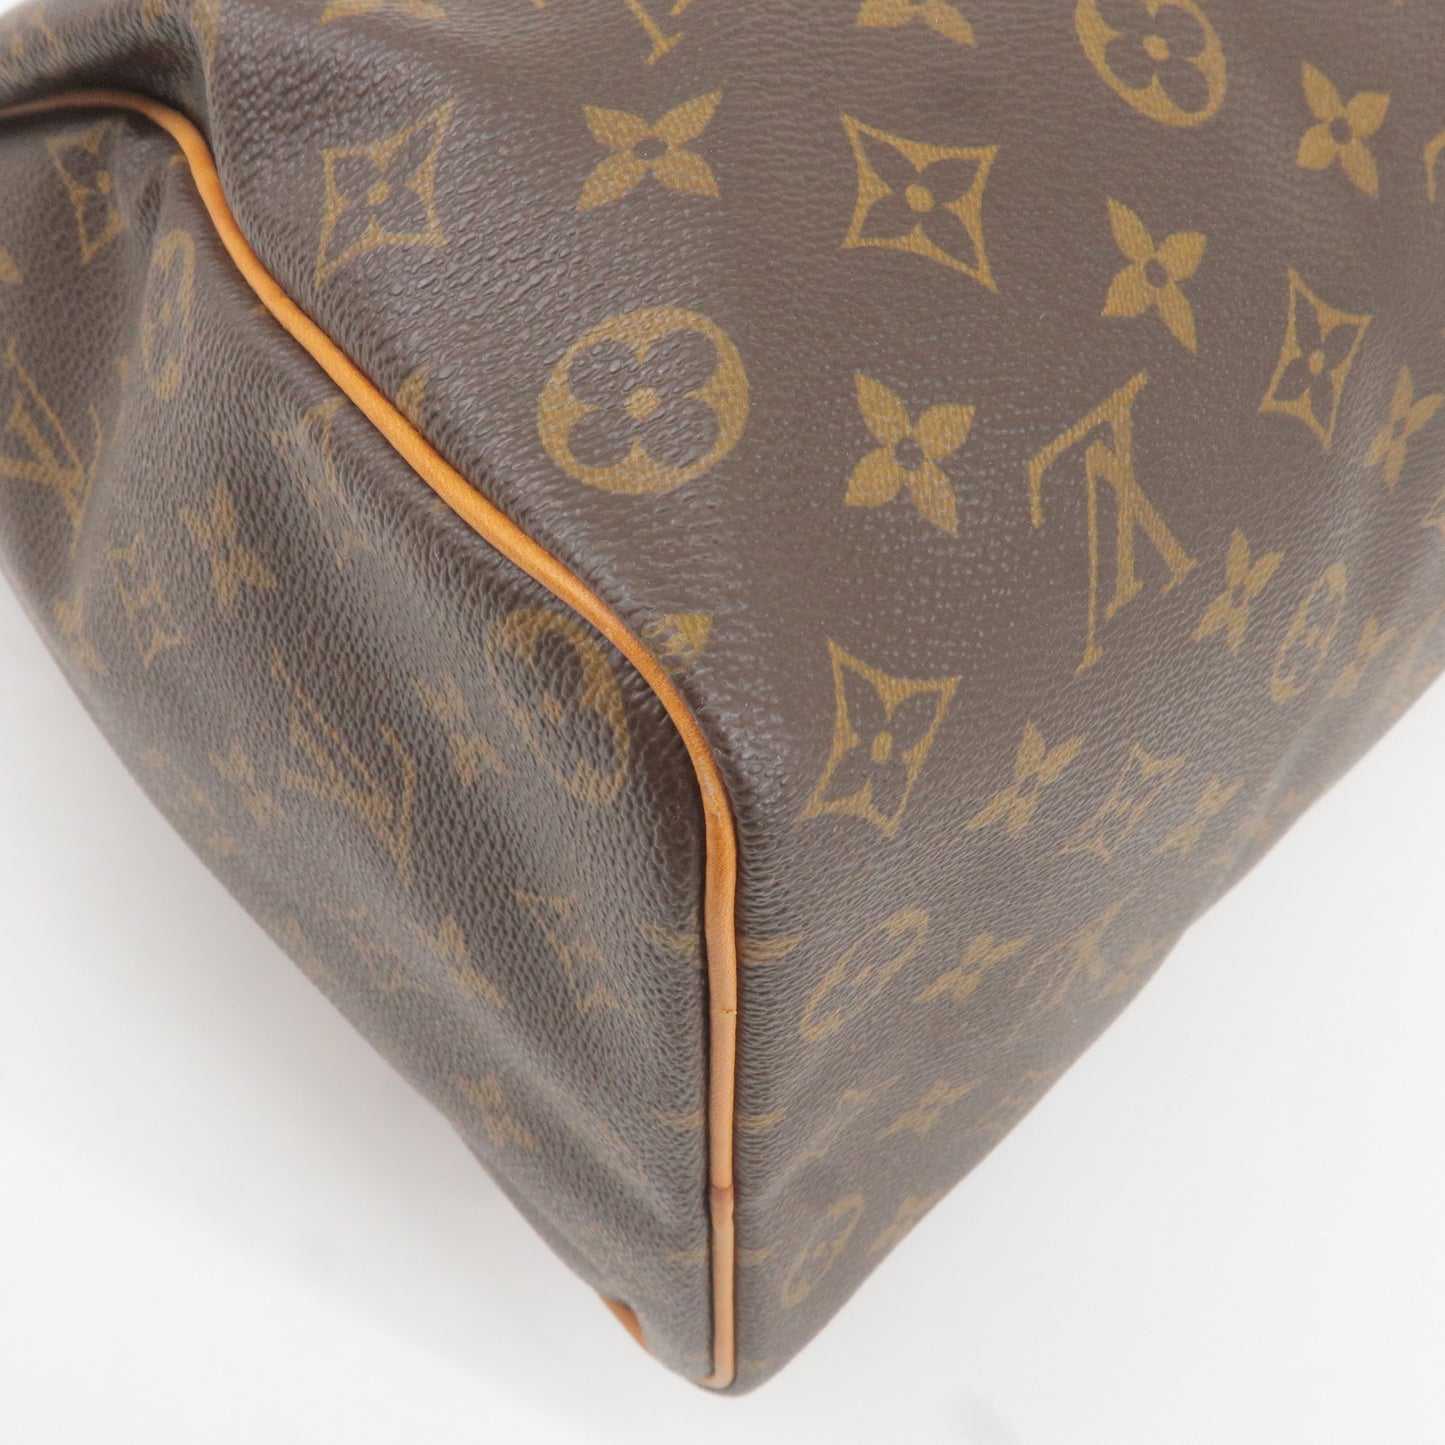 Louis Vuitton Monogram Speedy 35 Hand Bag Boston Bag M41524